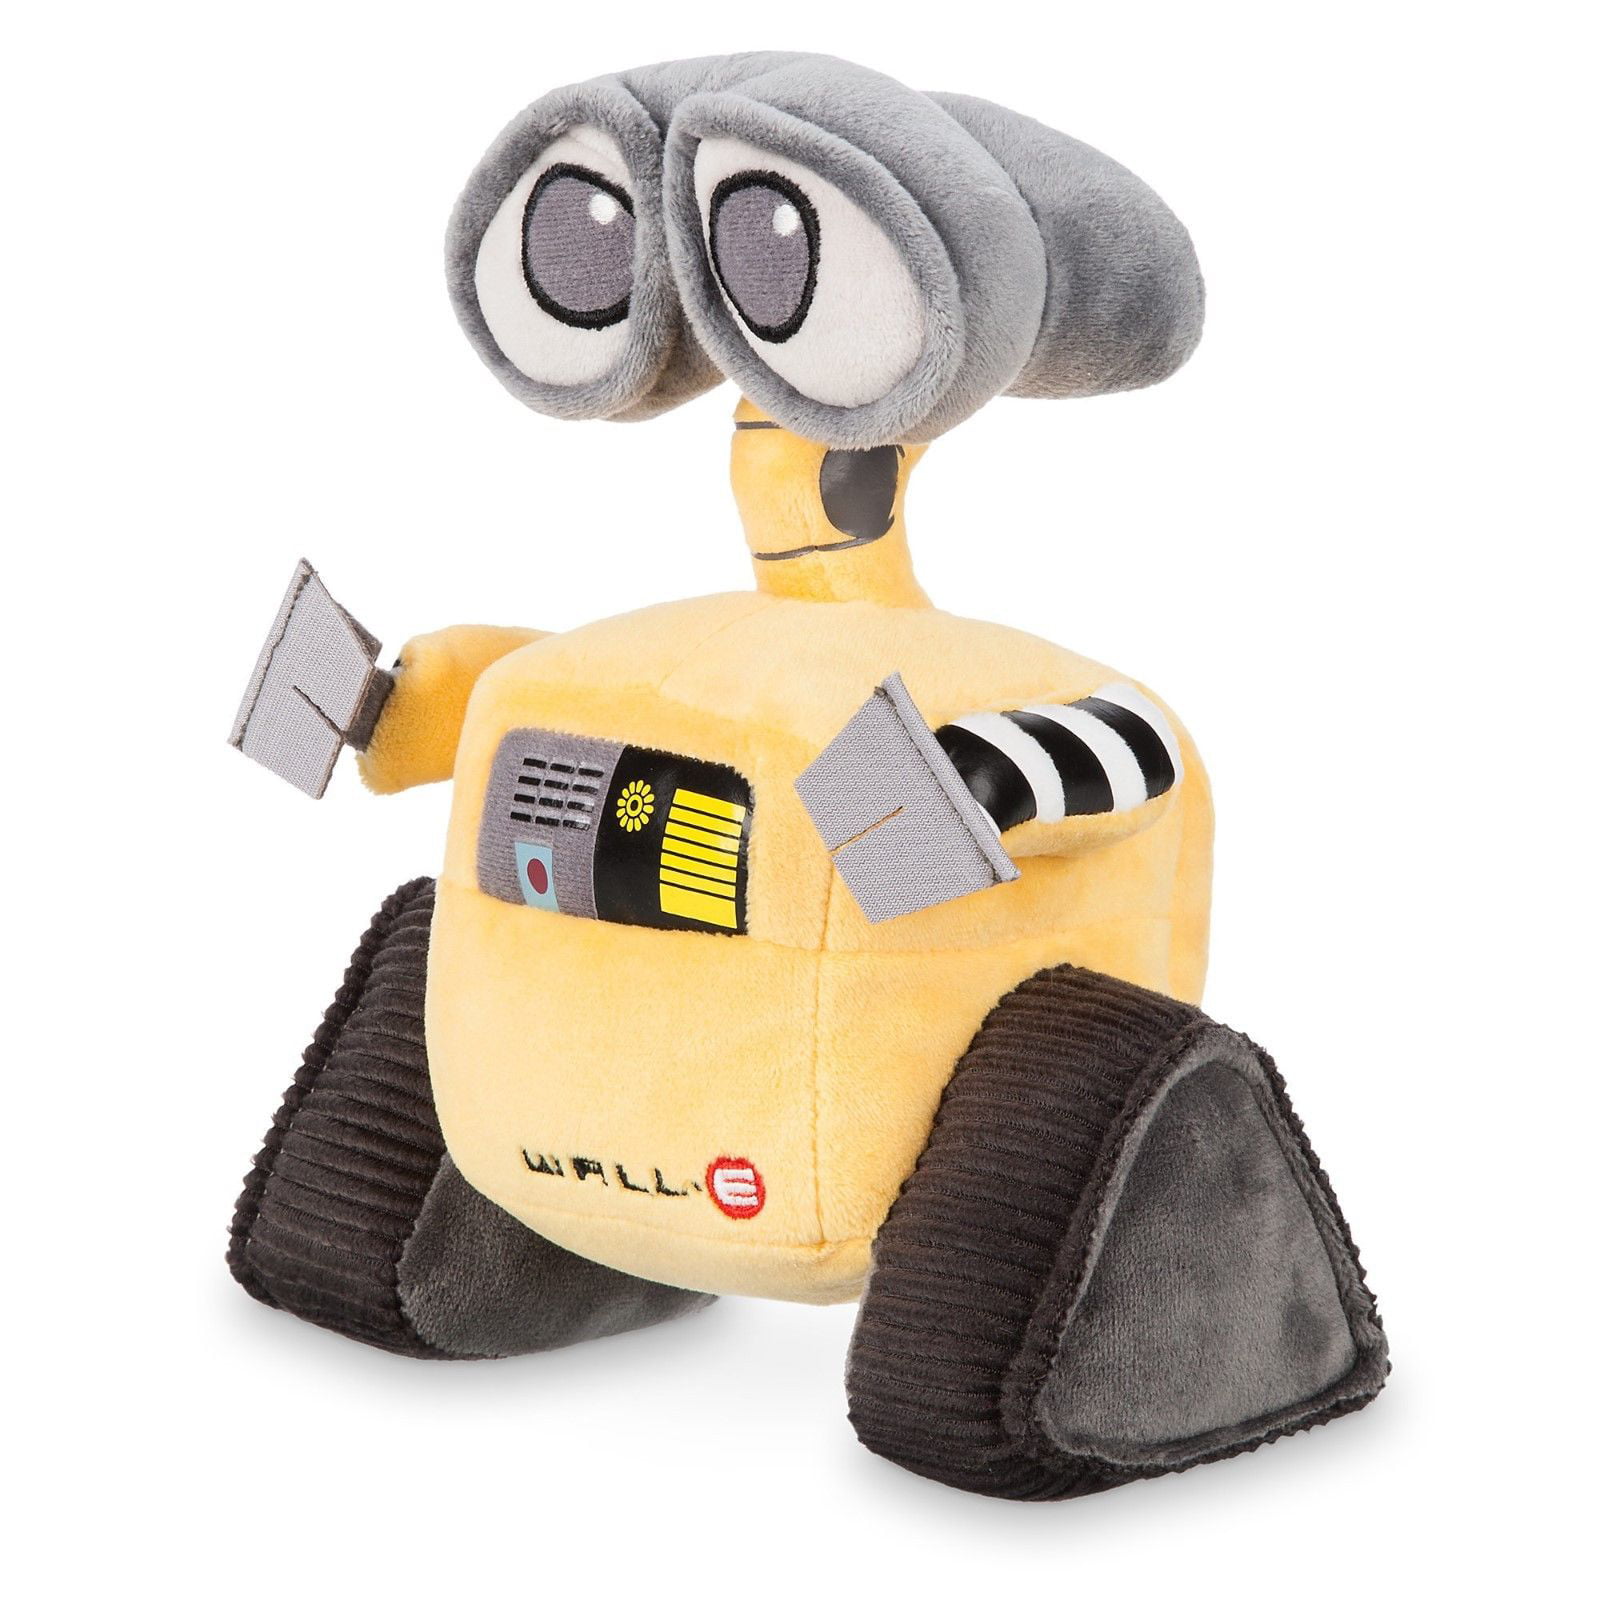 Wall-e Plush Toy Yellow Gray Disney Beanie Pixar Stuffed Trash Robot 2000 for sale online 